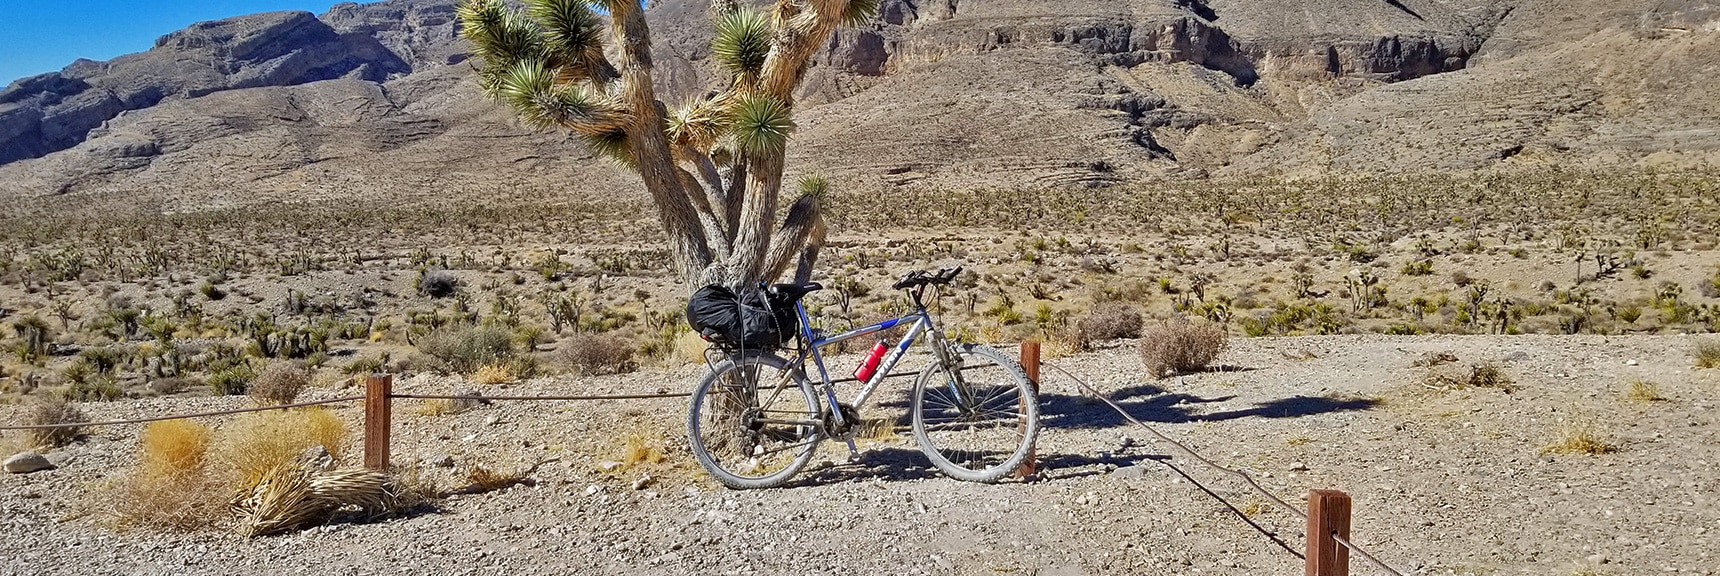 Mountain Bike Resting on Joshua Tree at a Mormon Well Road Highlight | Lower Mormon Well Road | Sheep Range, Desert National Wildlife Refuge, Nevada